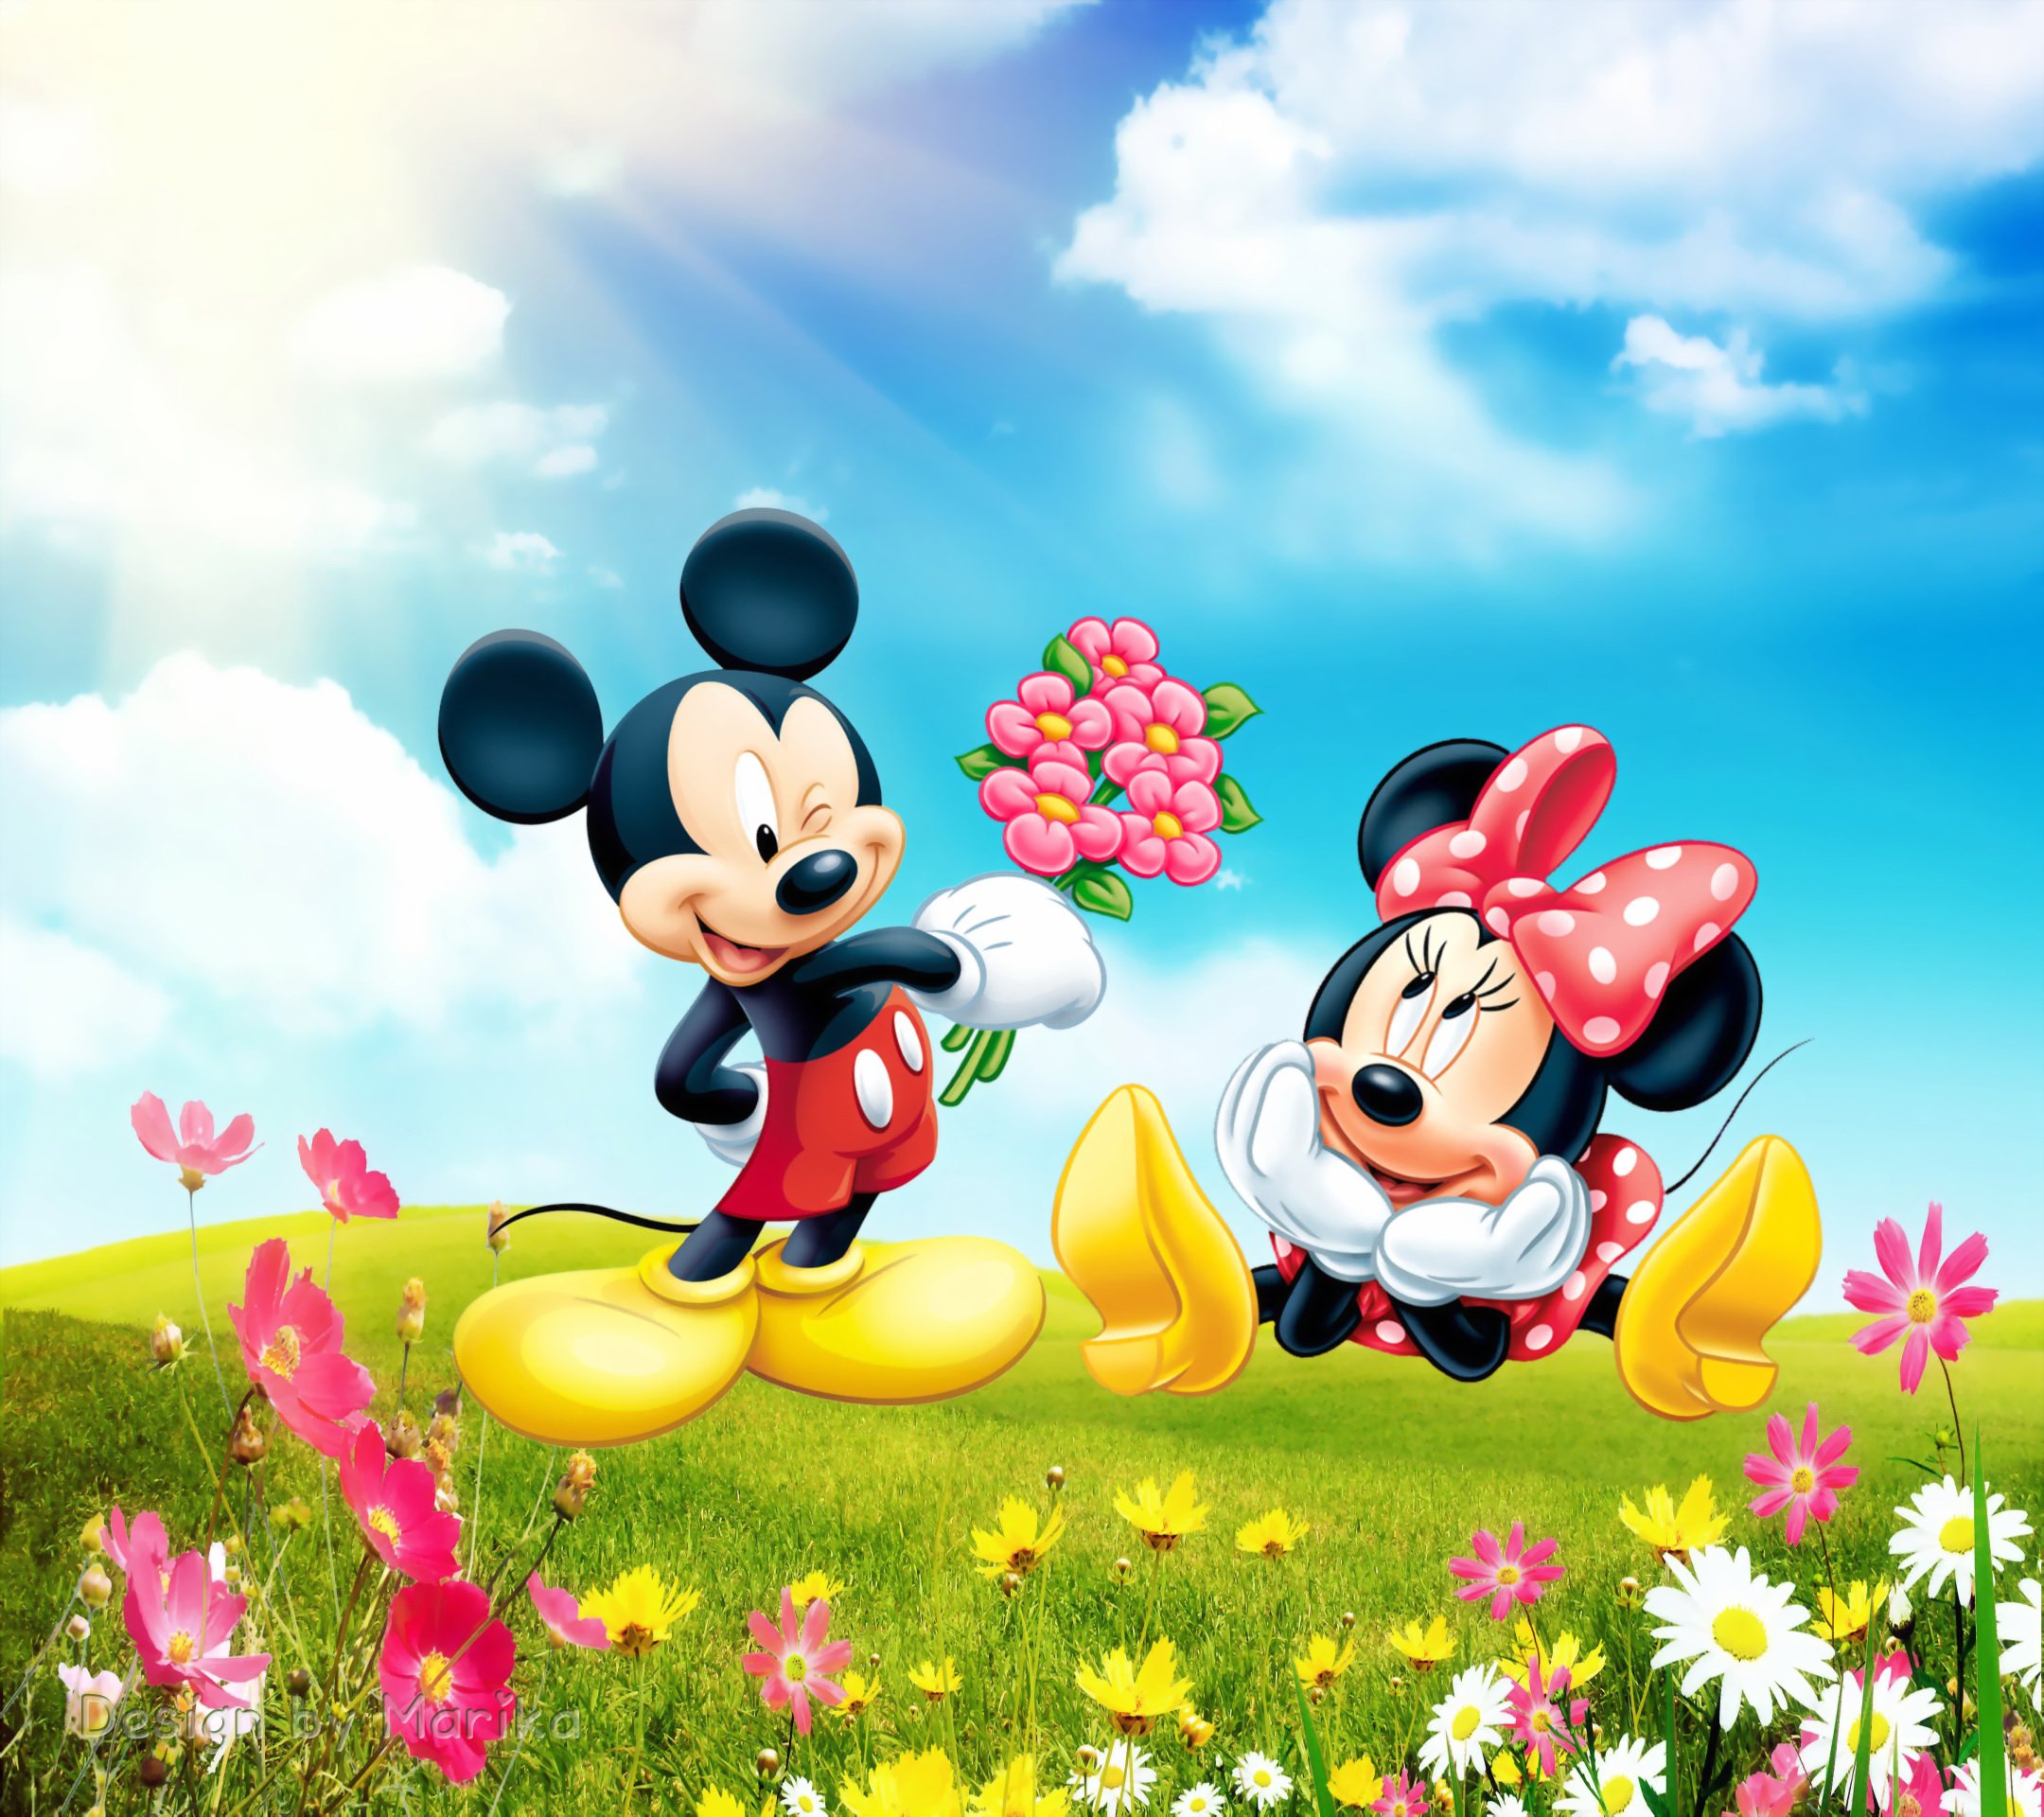 Mickey Minnie Desktop Background HD Wallpaper. ❤️Mickey&Minnie